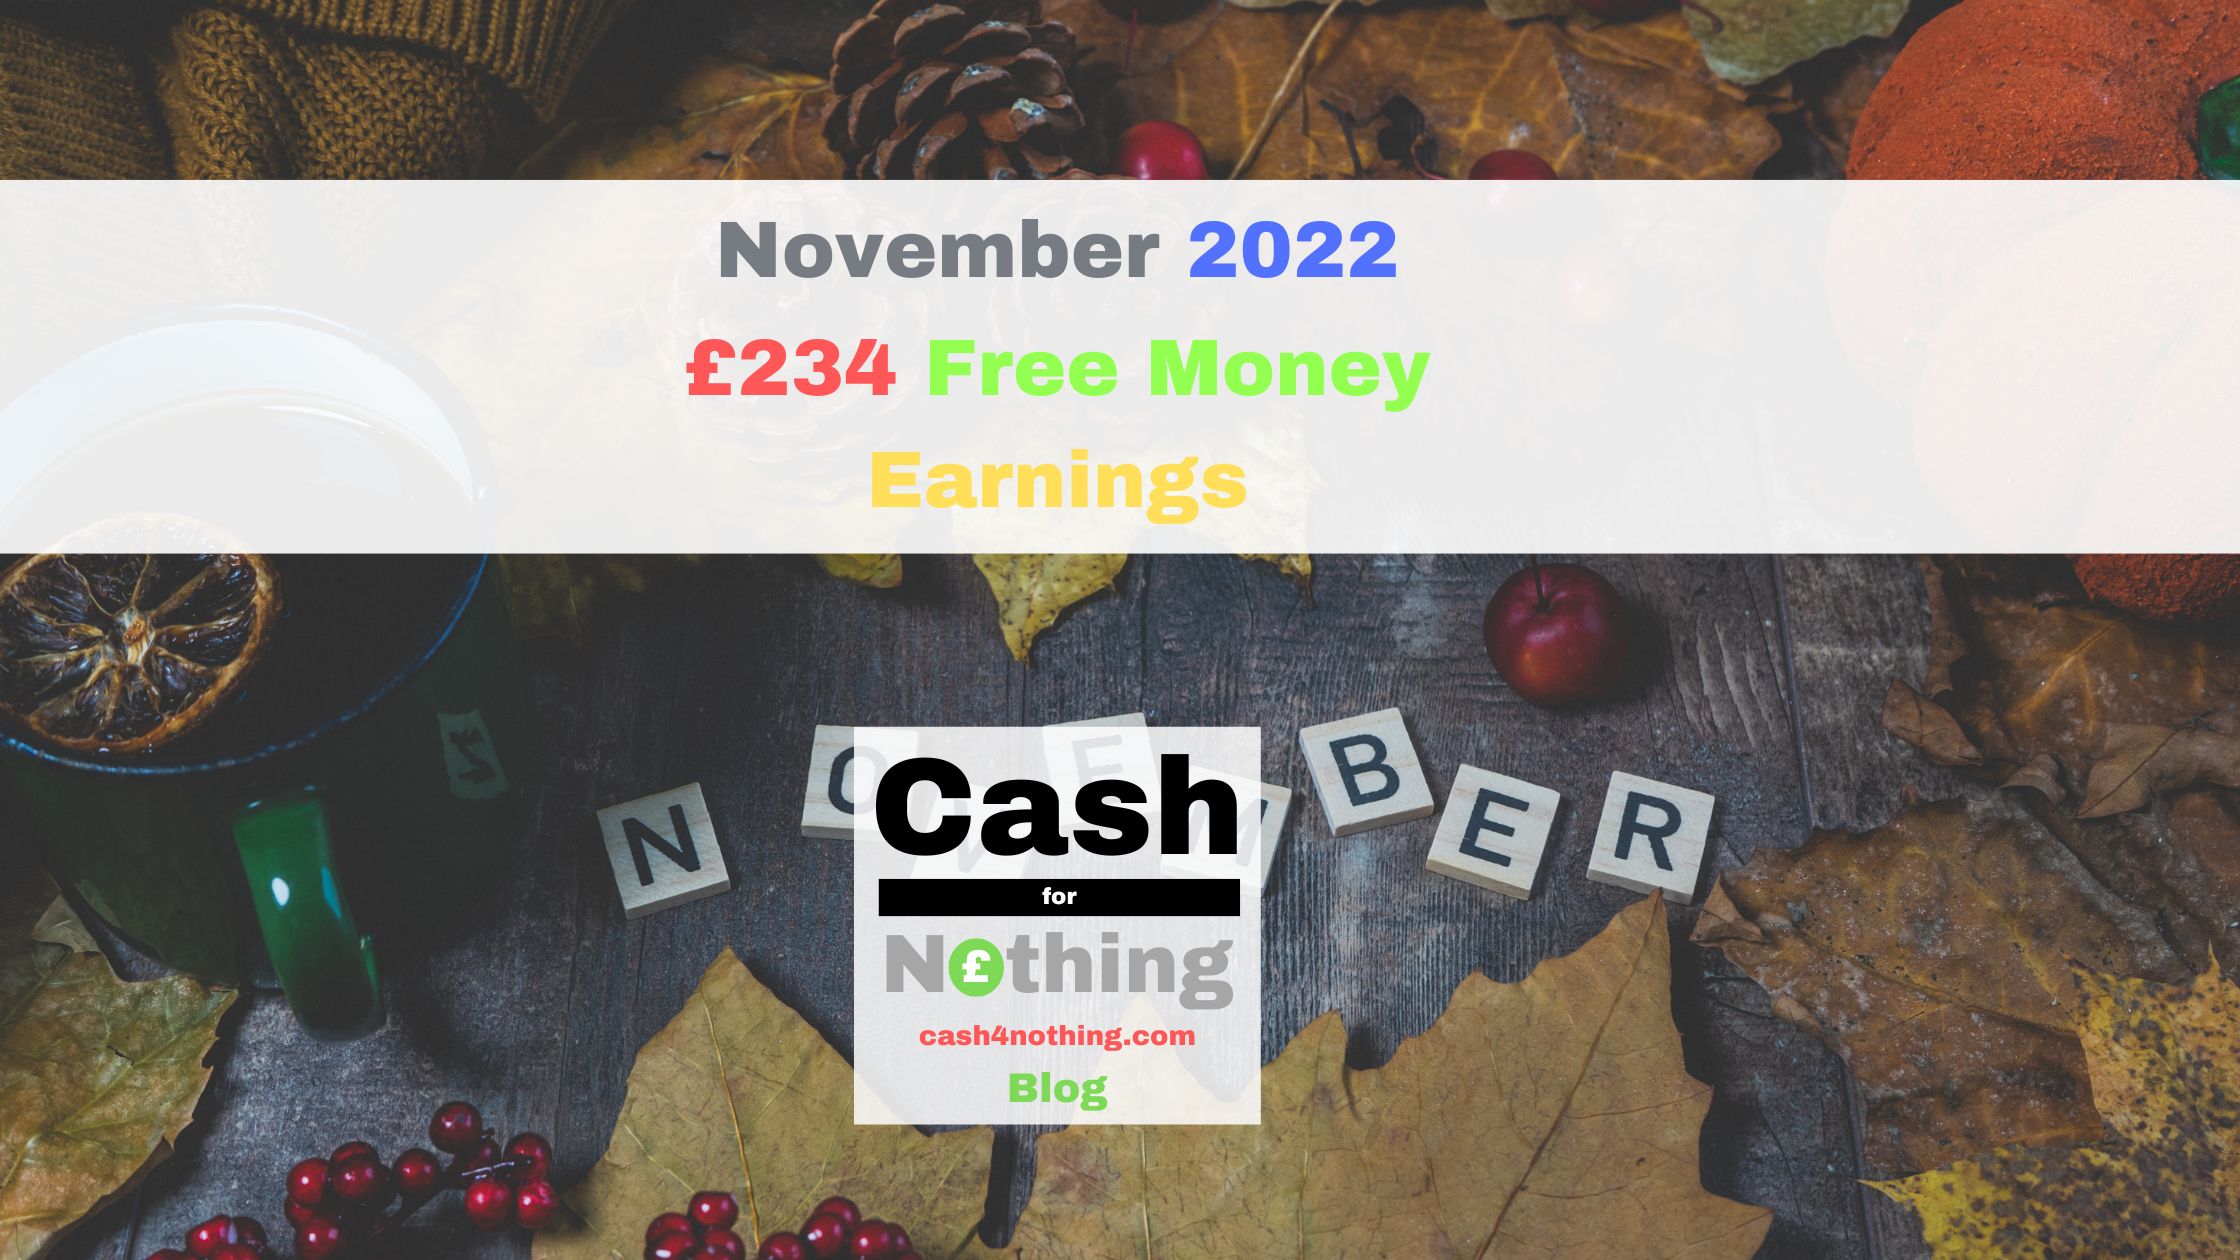 Cash4Nothing November 2022 Free Money Earnings